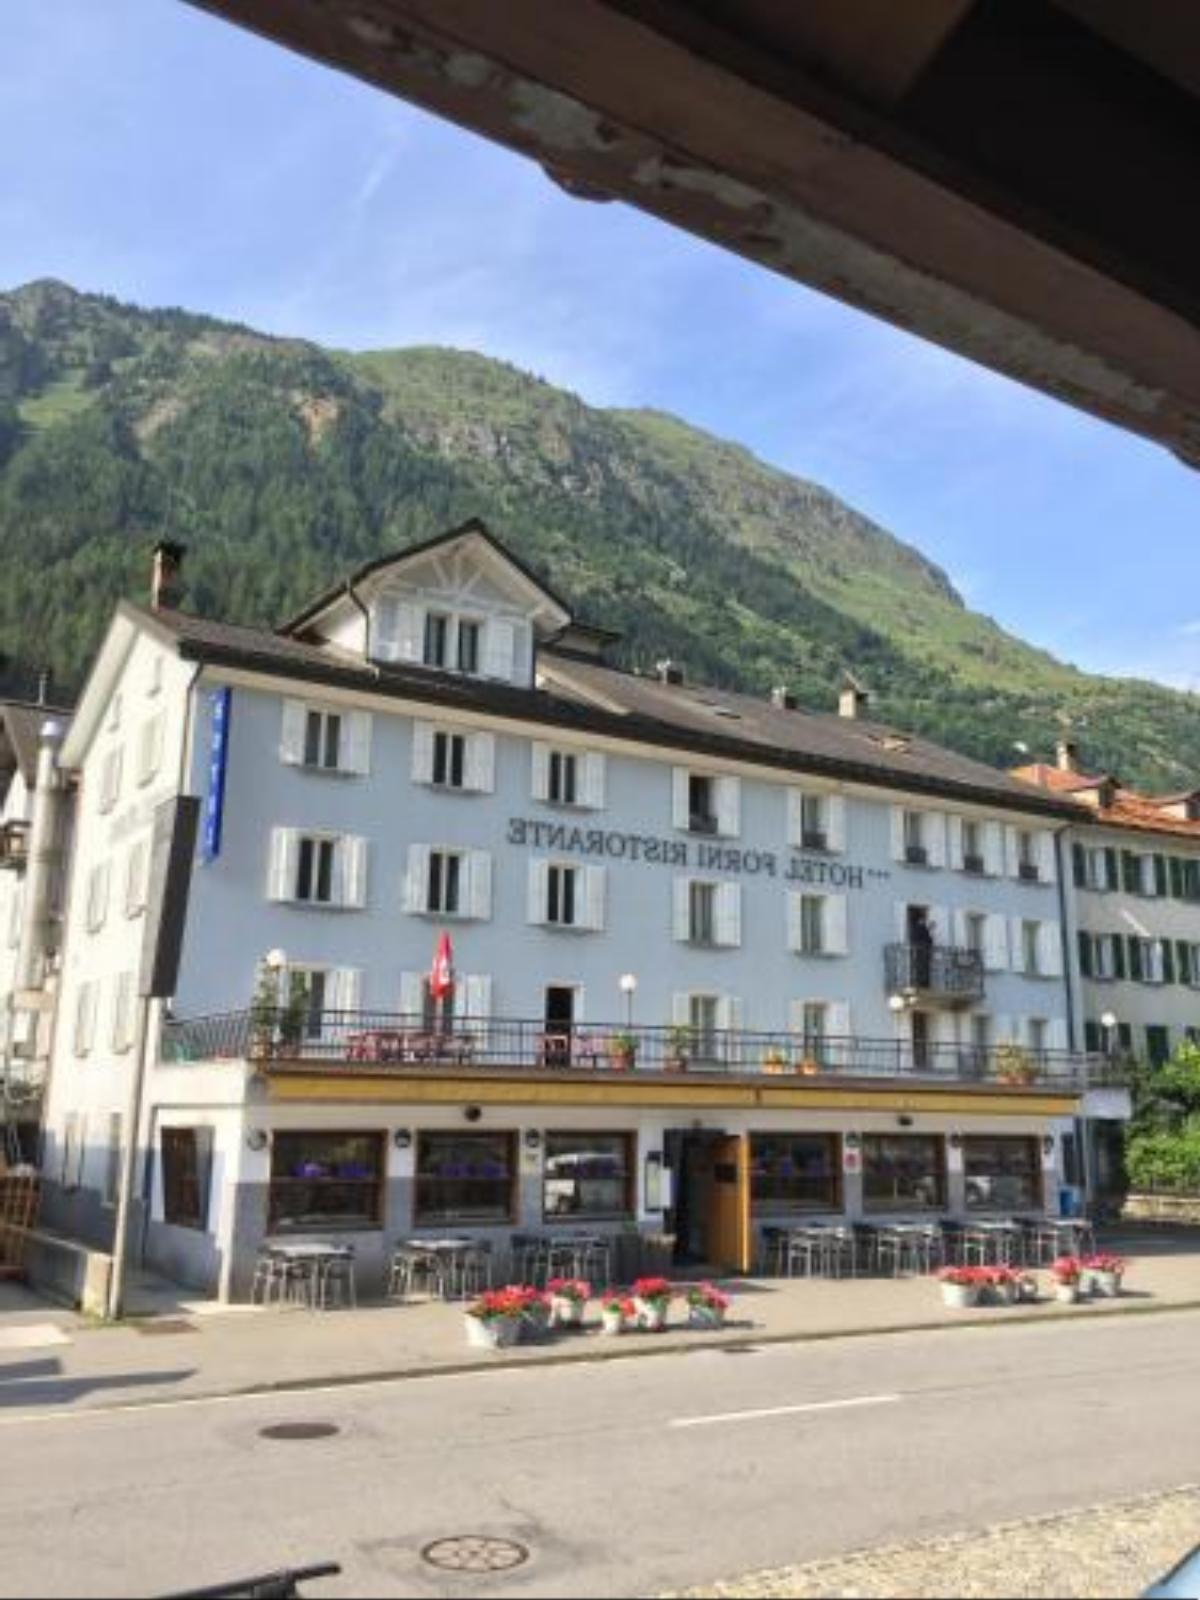 Hotel Forni Hotel Airolo Switzerland